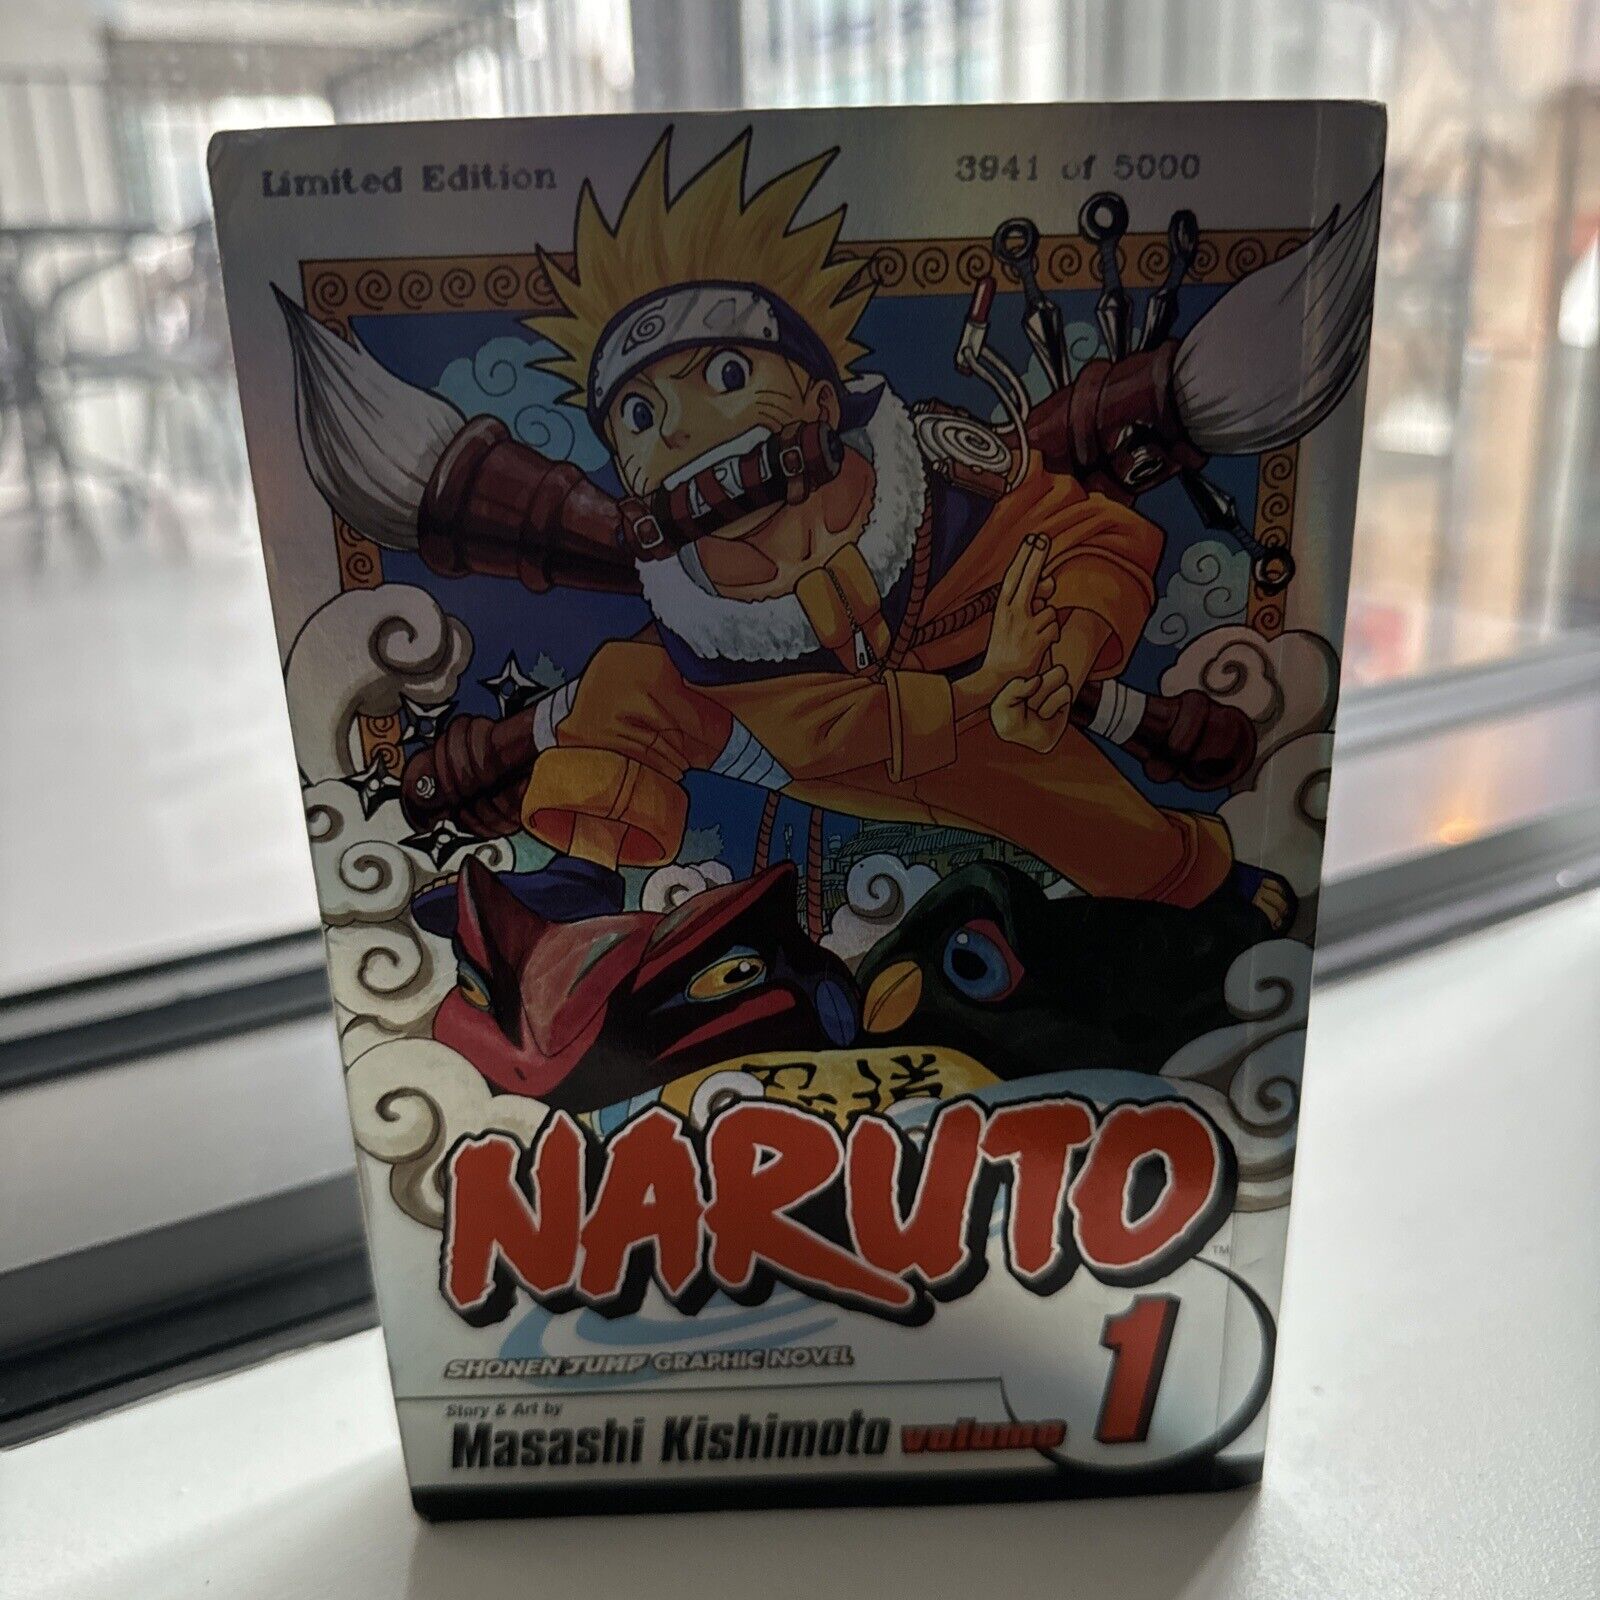 Naruto Vol.1 Limited Edition 2003 Manga (3941 of 5000) English Shiny Holo Cover